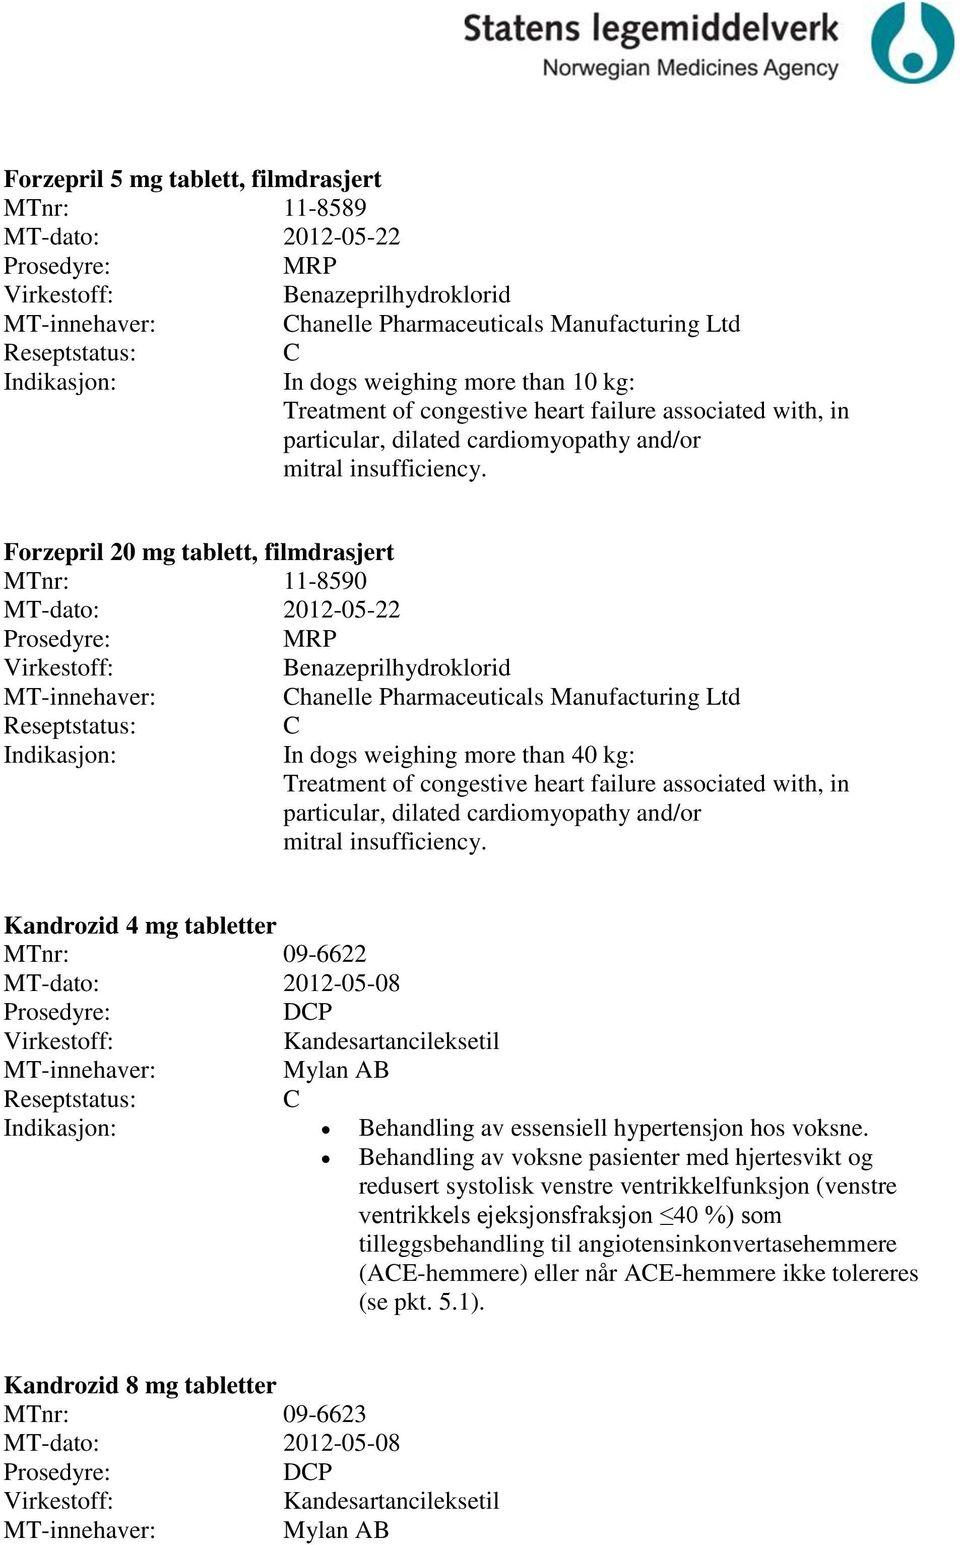 Forzepril 20 mg tablett, filmdrasjert 11-8590 MT-dato: 2012-05-22 Benazeprilhydroklorid hanelle Pharmaceuticals Manufacturing Ltd In dogs weighing more than 40 kg: Treatment of congestive heart 